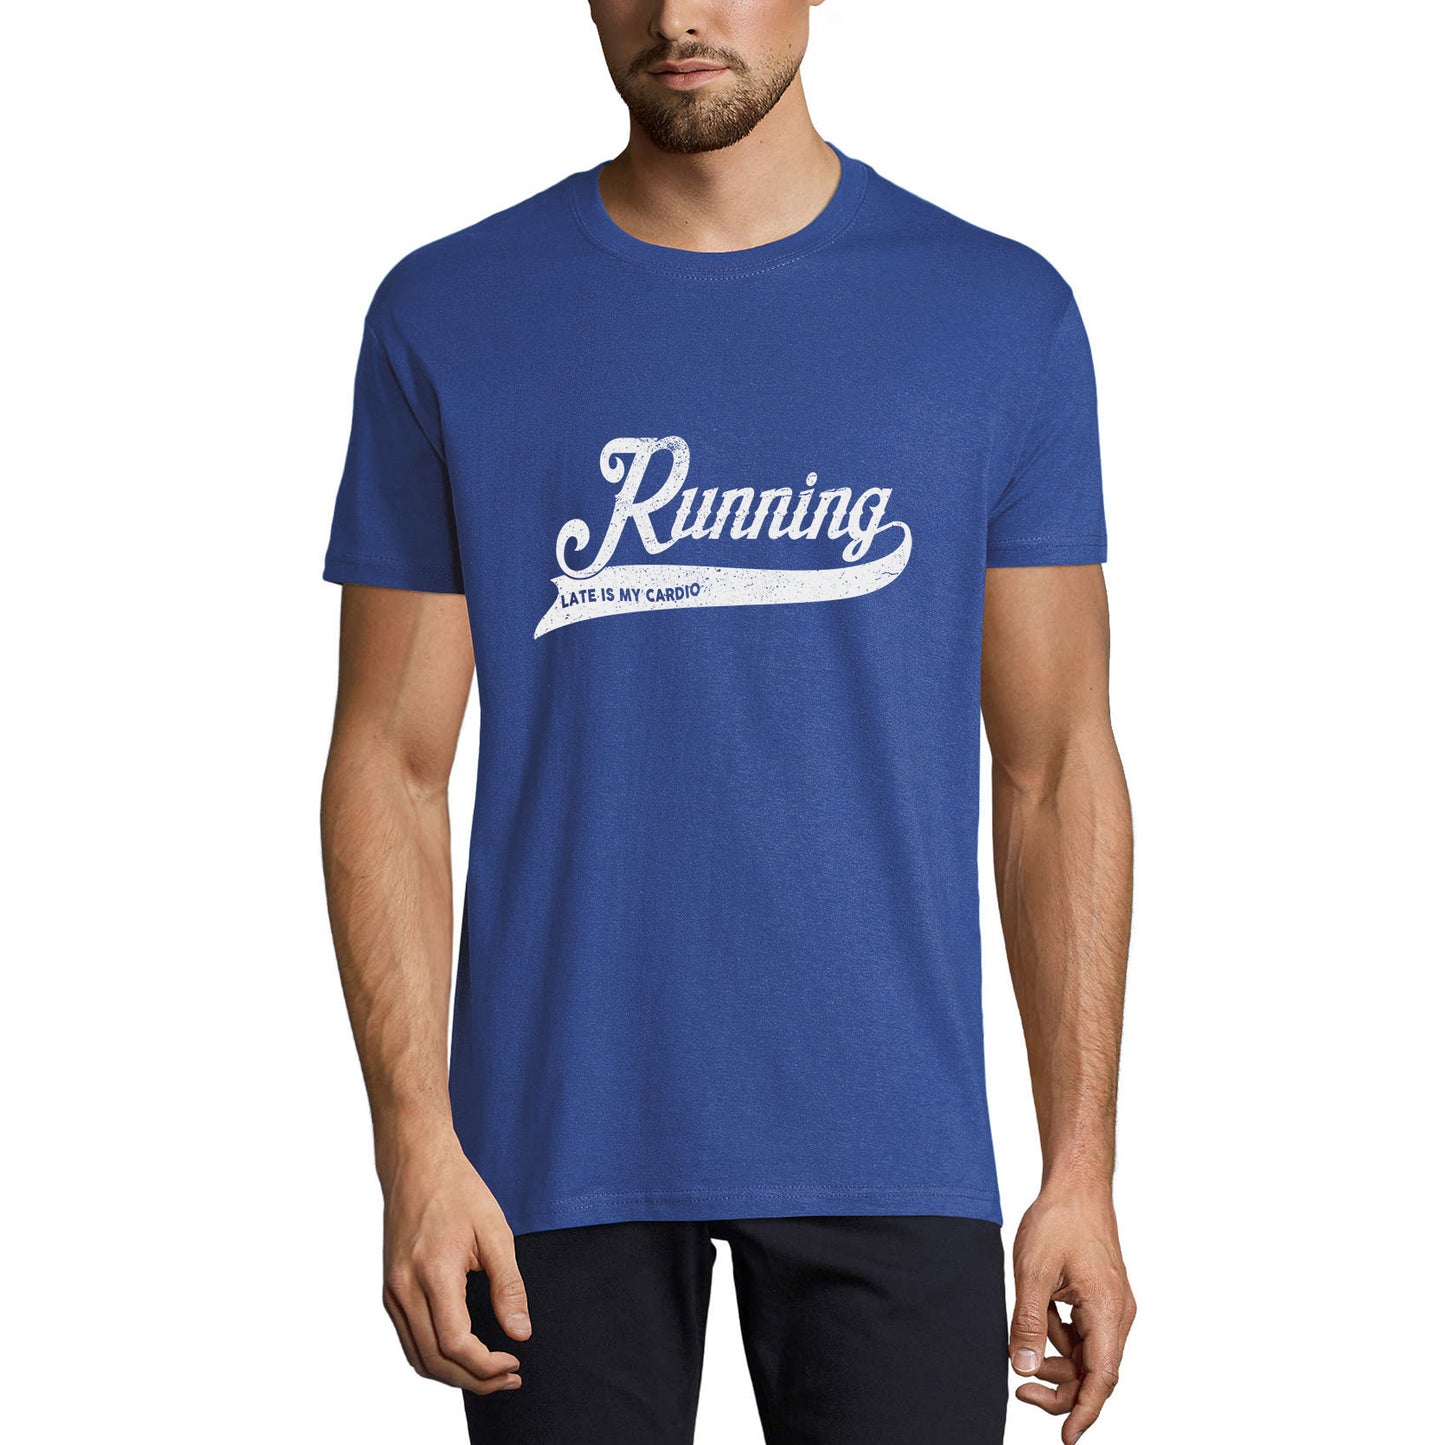 ULTRABASIC Men's Novelty T-Shirt Running Late Is My Cardio - Funny Runner Tee Shirt